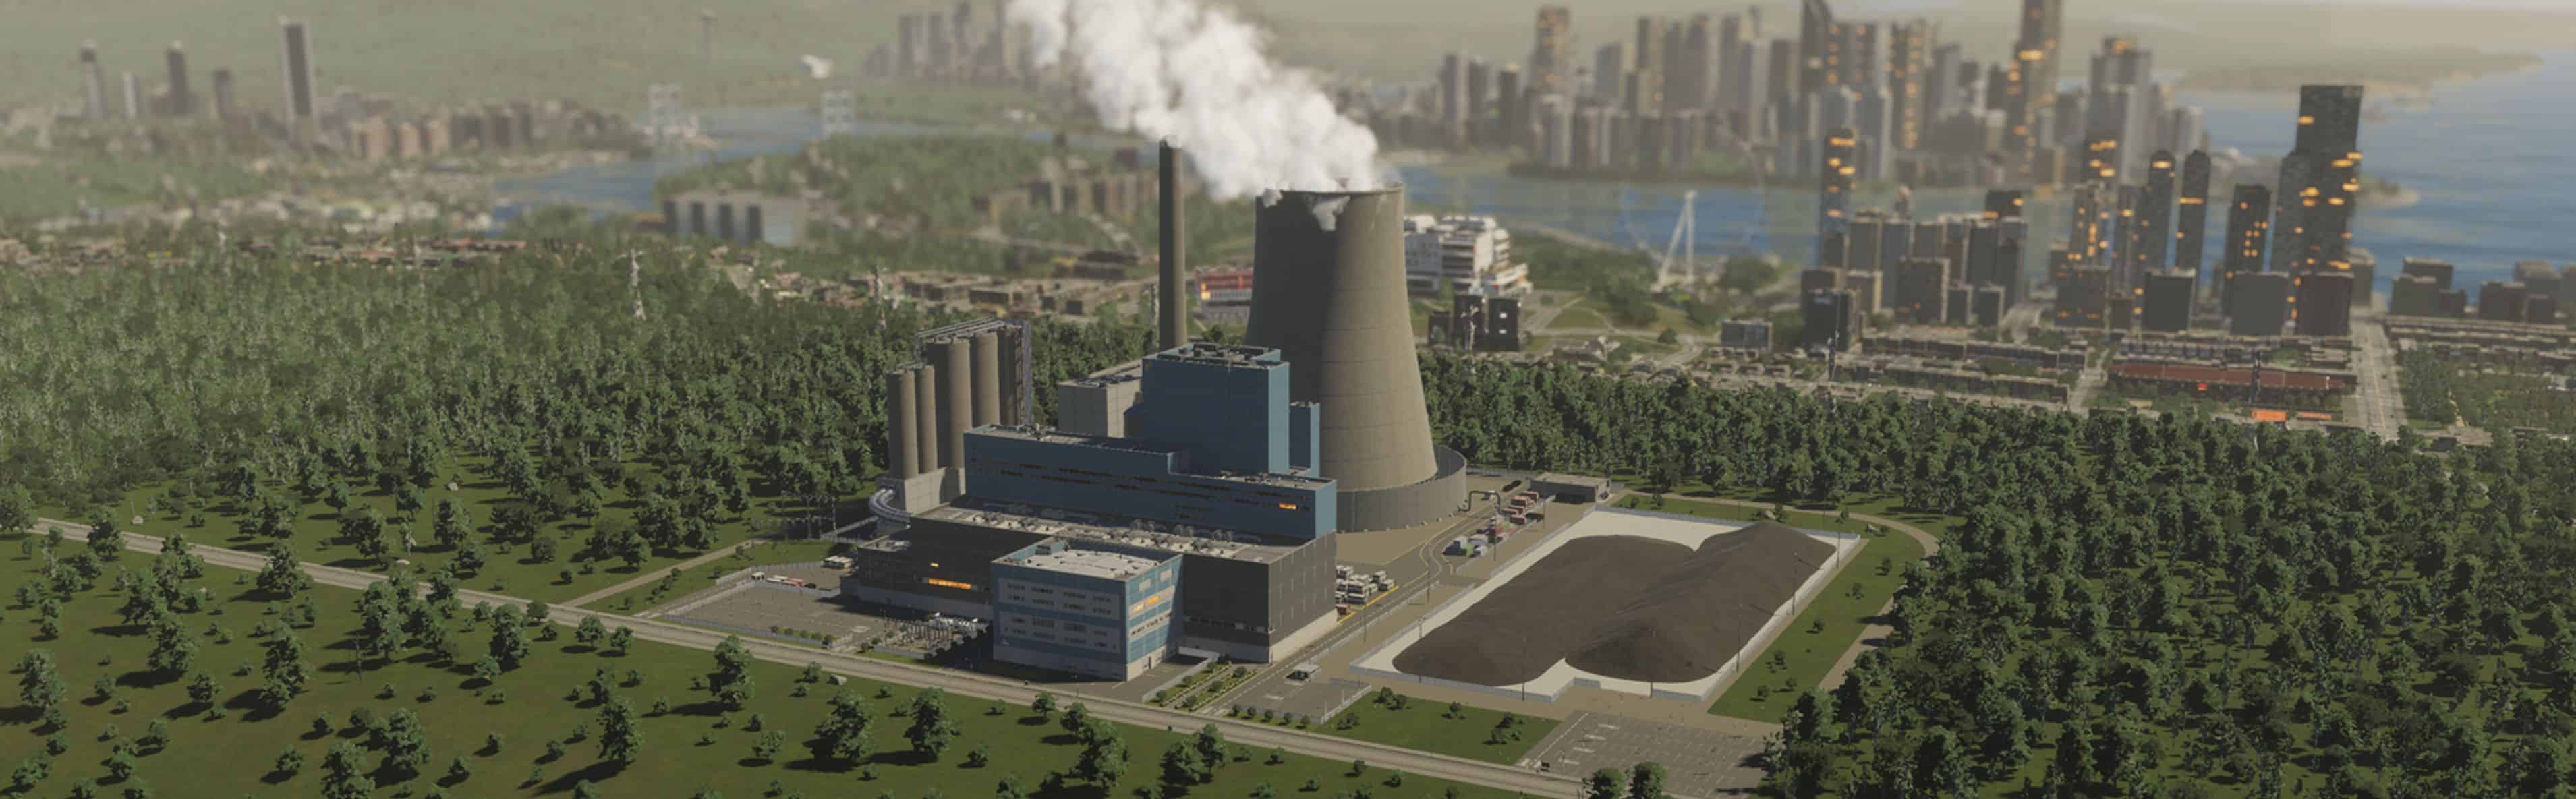 Cities Skylines 2: Coal Power Plant, Gas Power Plant | Cities: Skylines ...